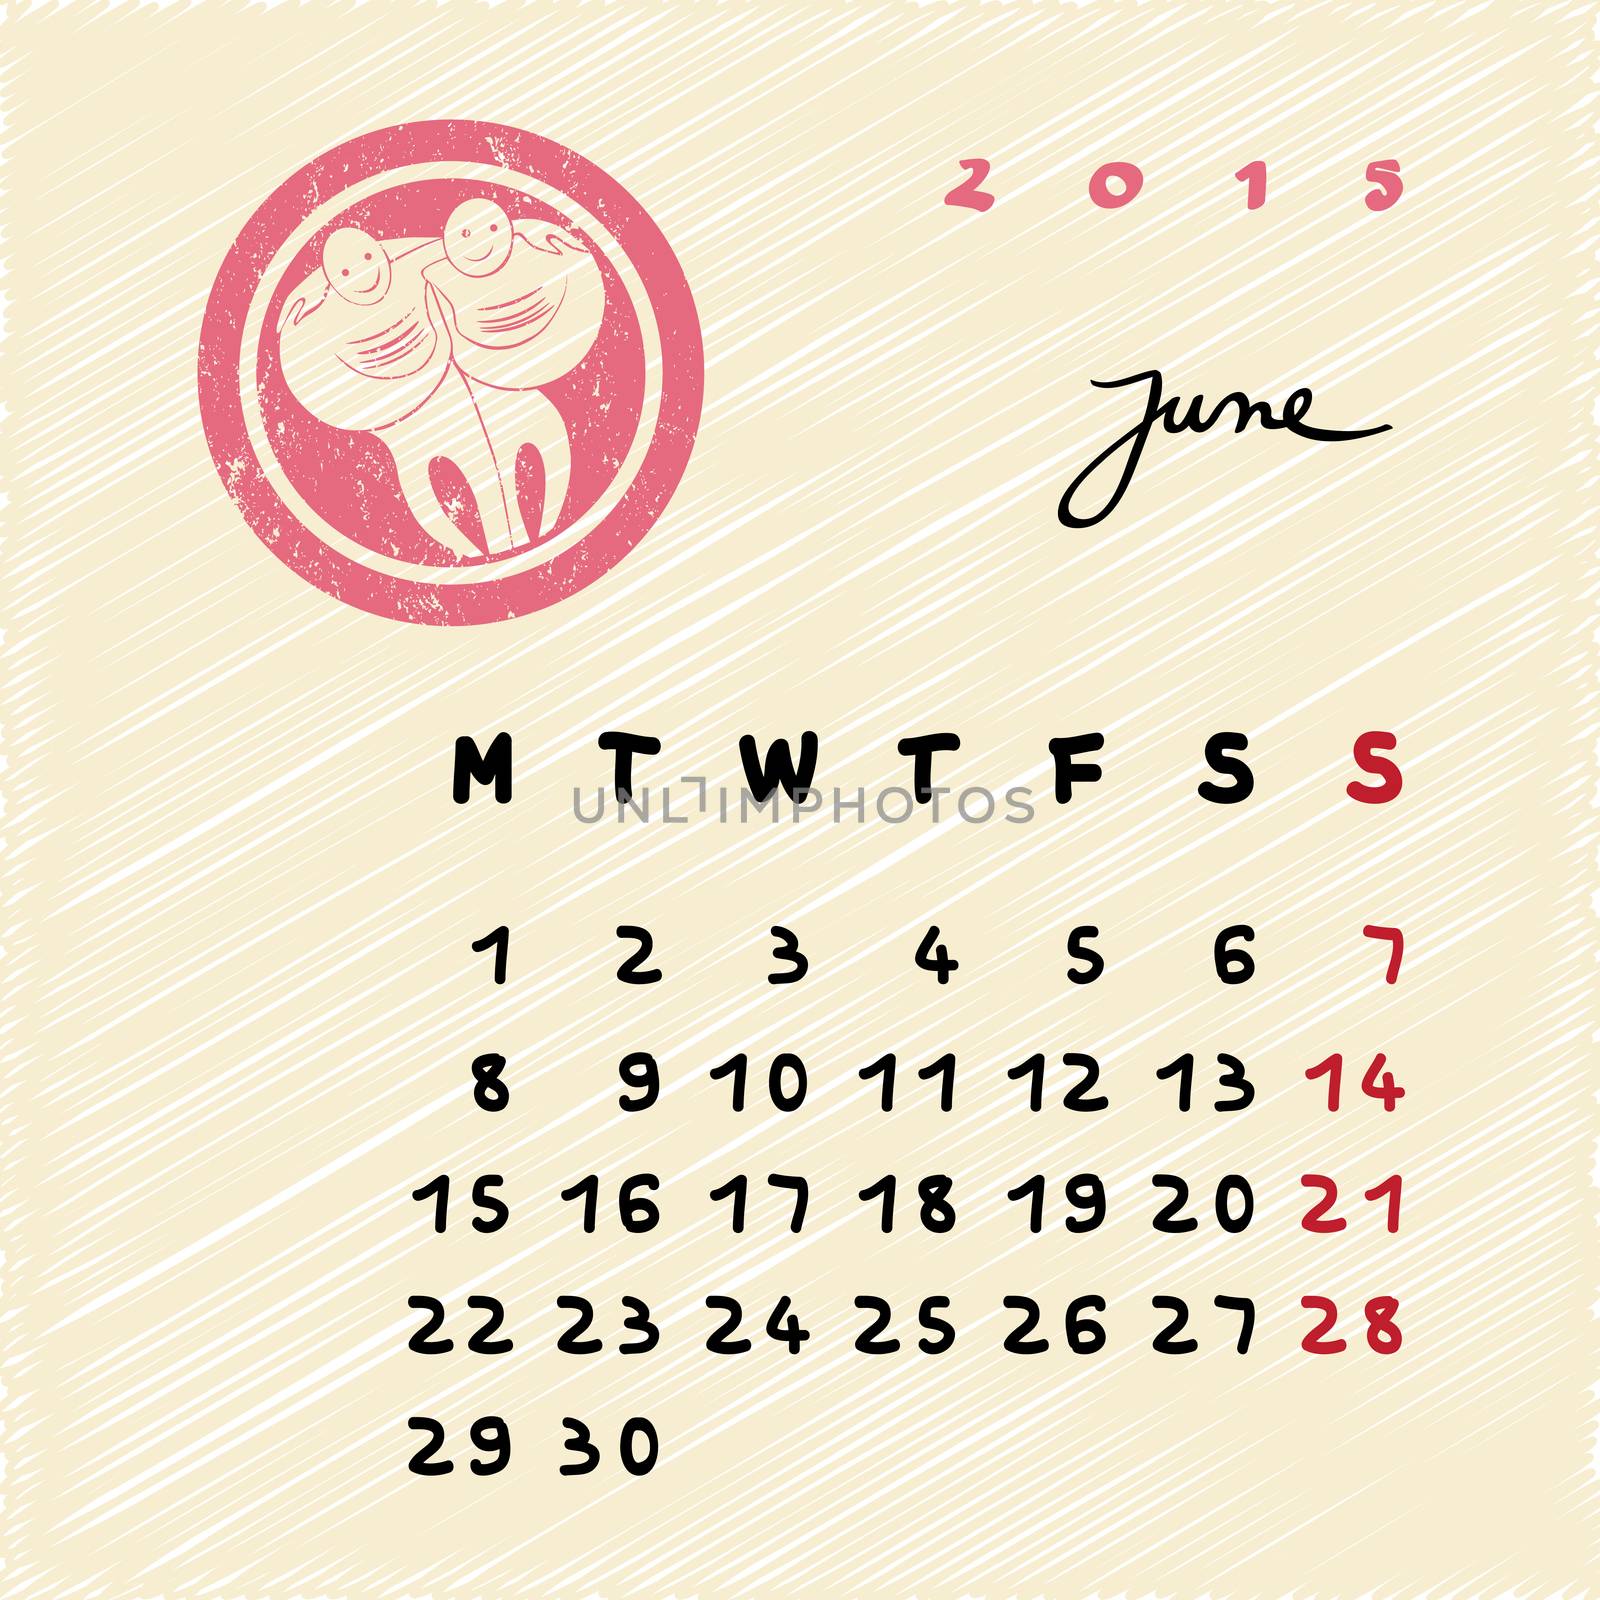 june 2015 zodiac by catacos